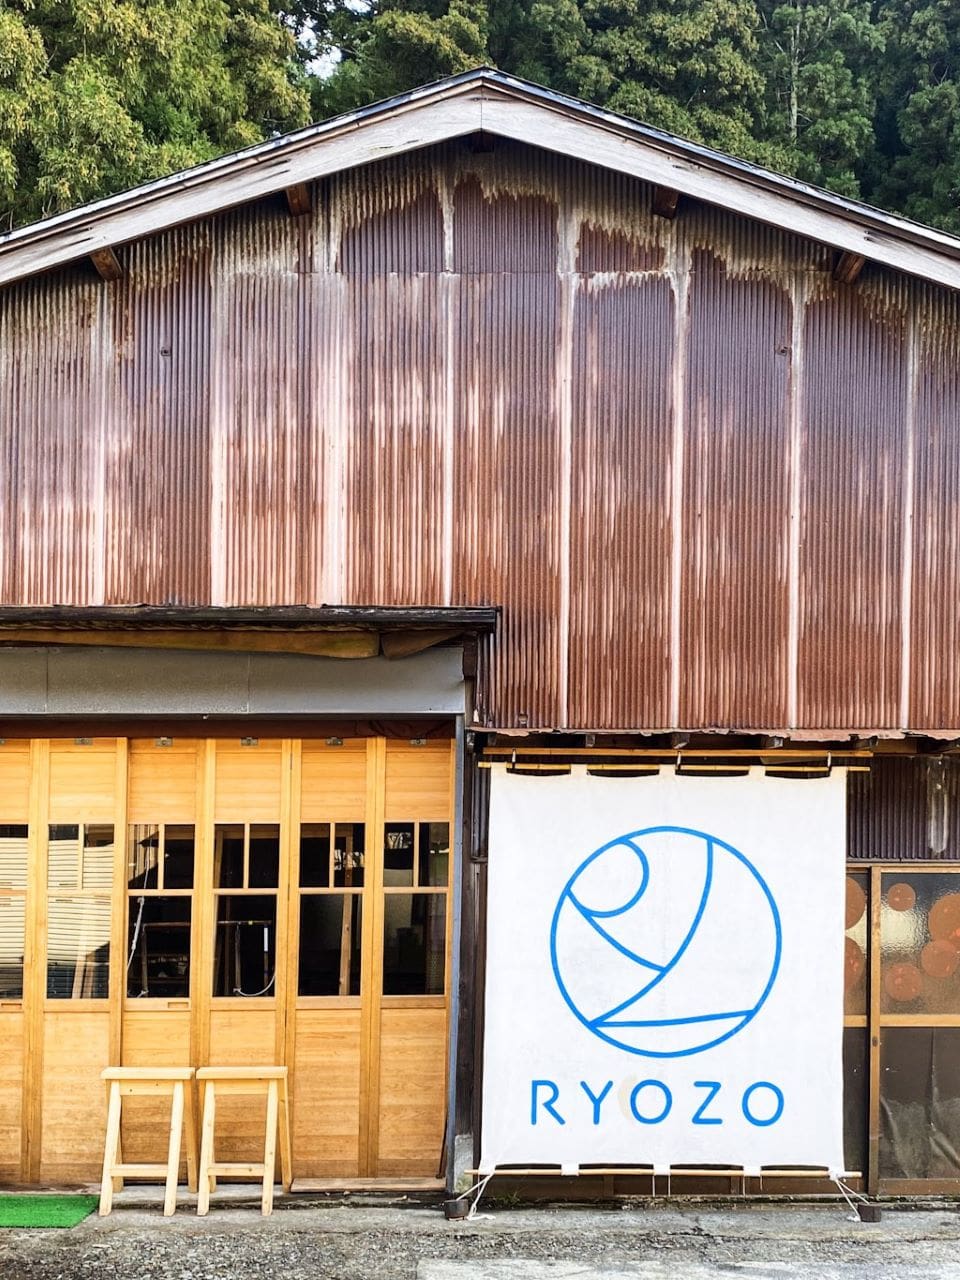 Ryozo shop front